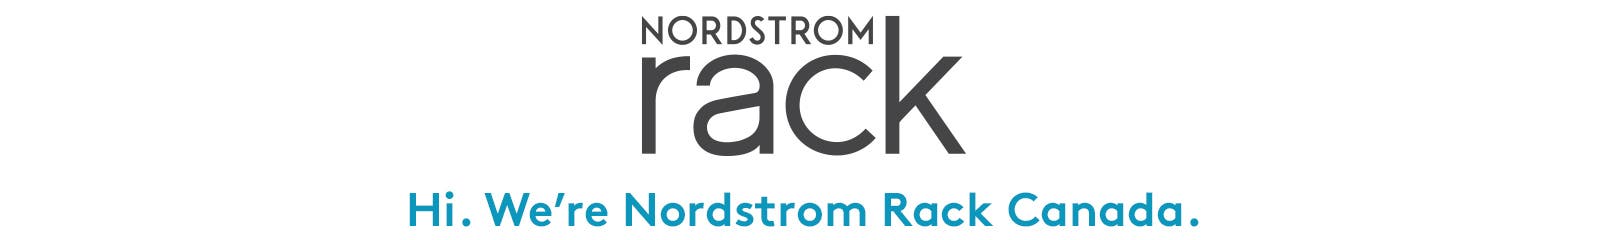 Hi. We’re Nordstrom Rack Canada.